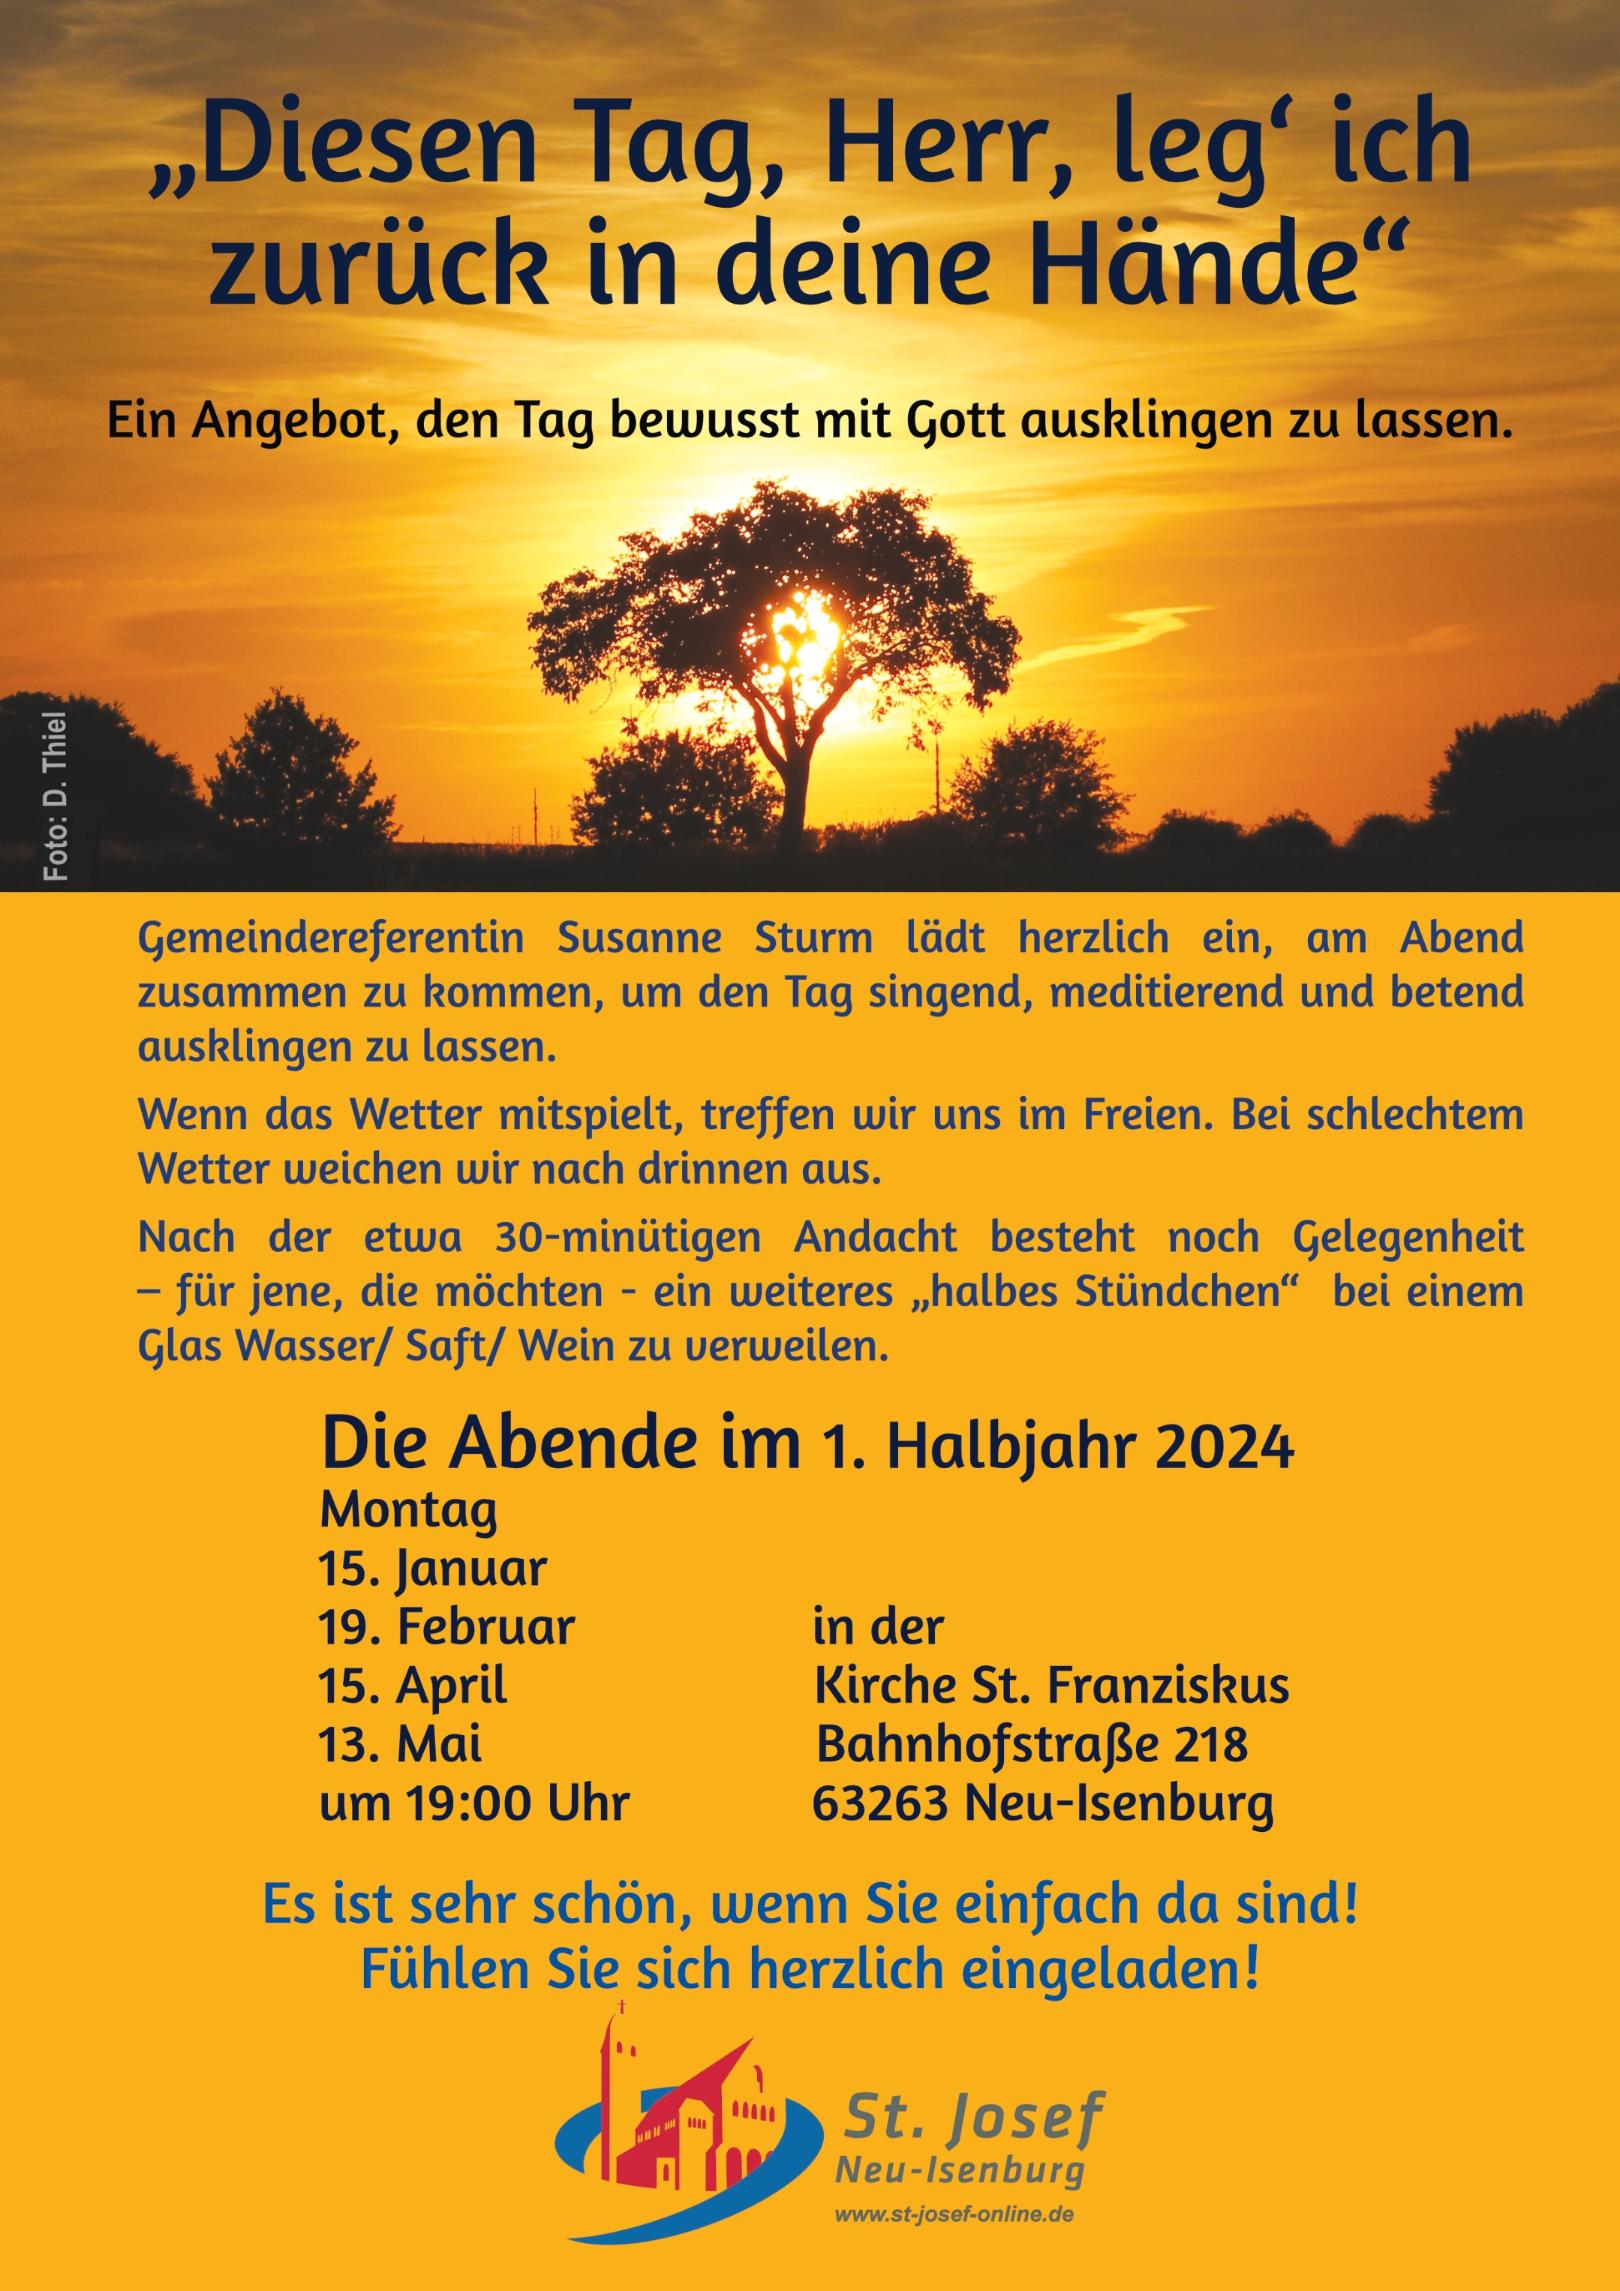 Plakat Diesen Tag I 2024 (c) D. Thiel